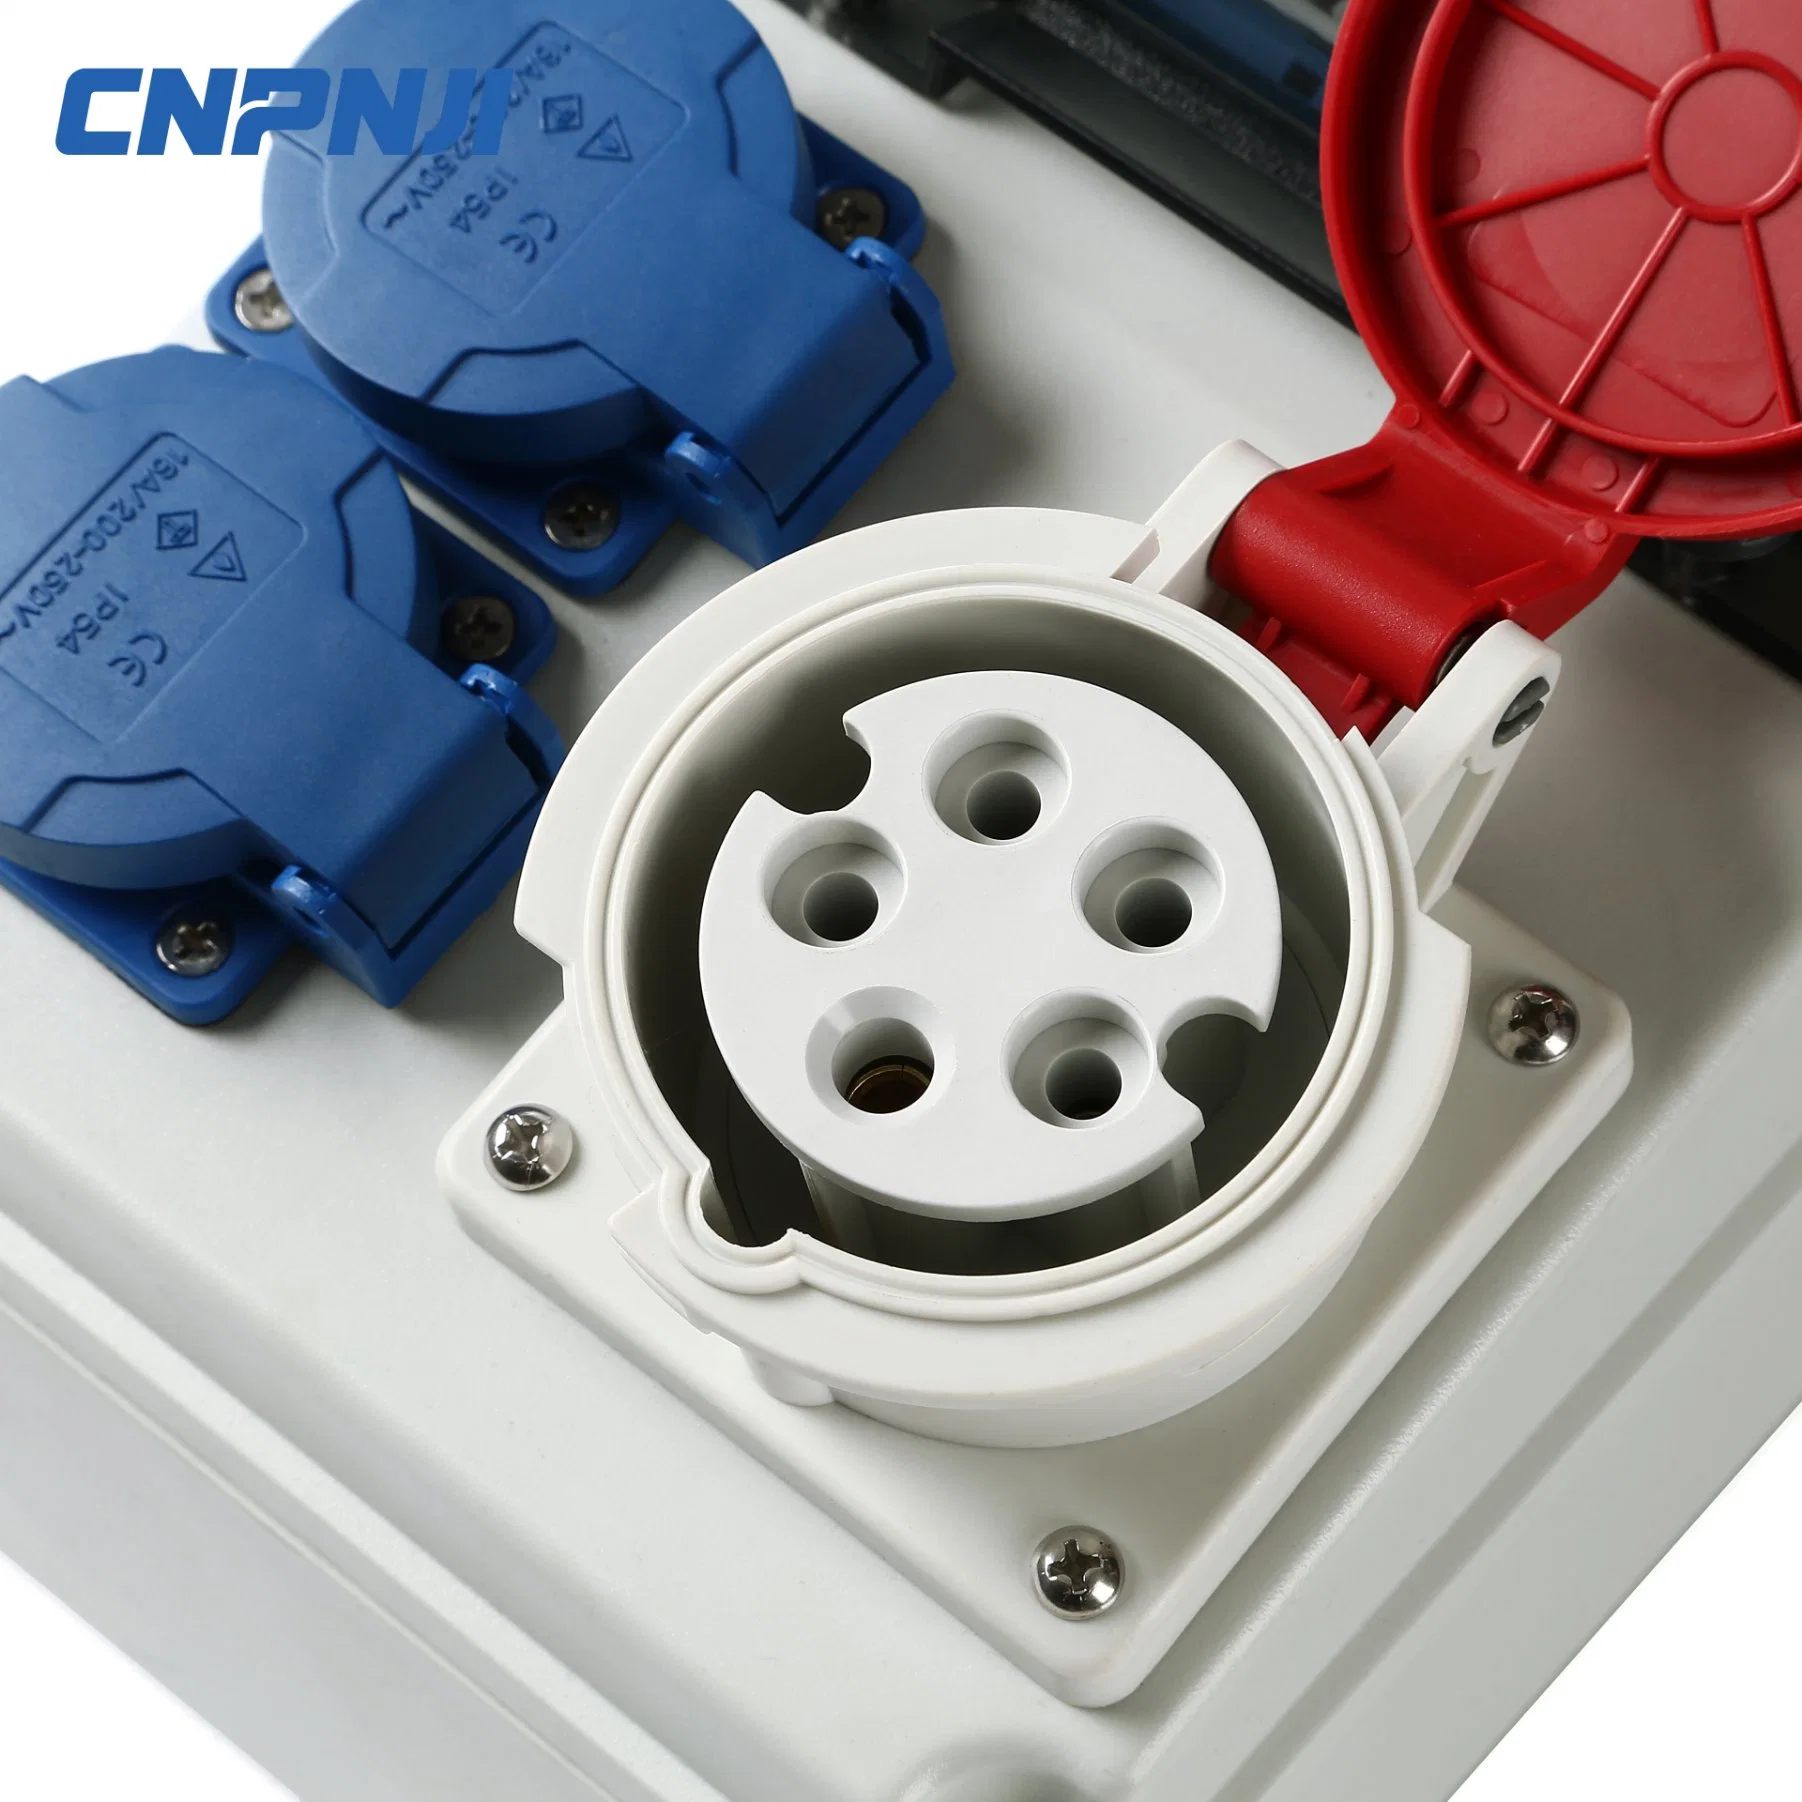 Cnpnji Engineering Production Custom Portable Mobile Power Maintenance Box Waterproof Socket Box